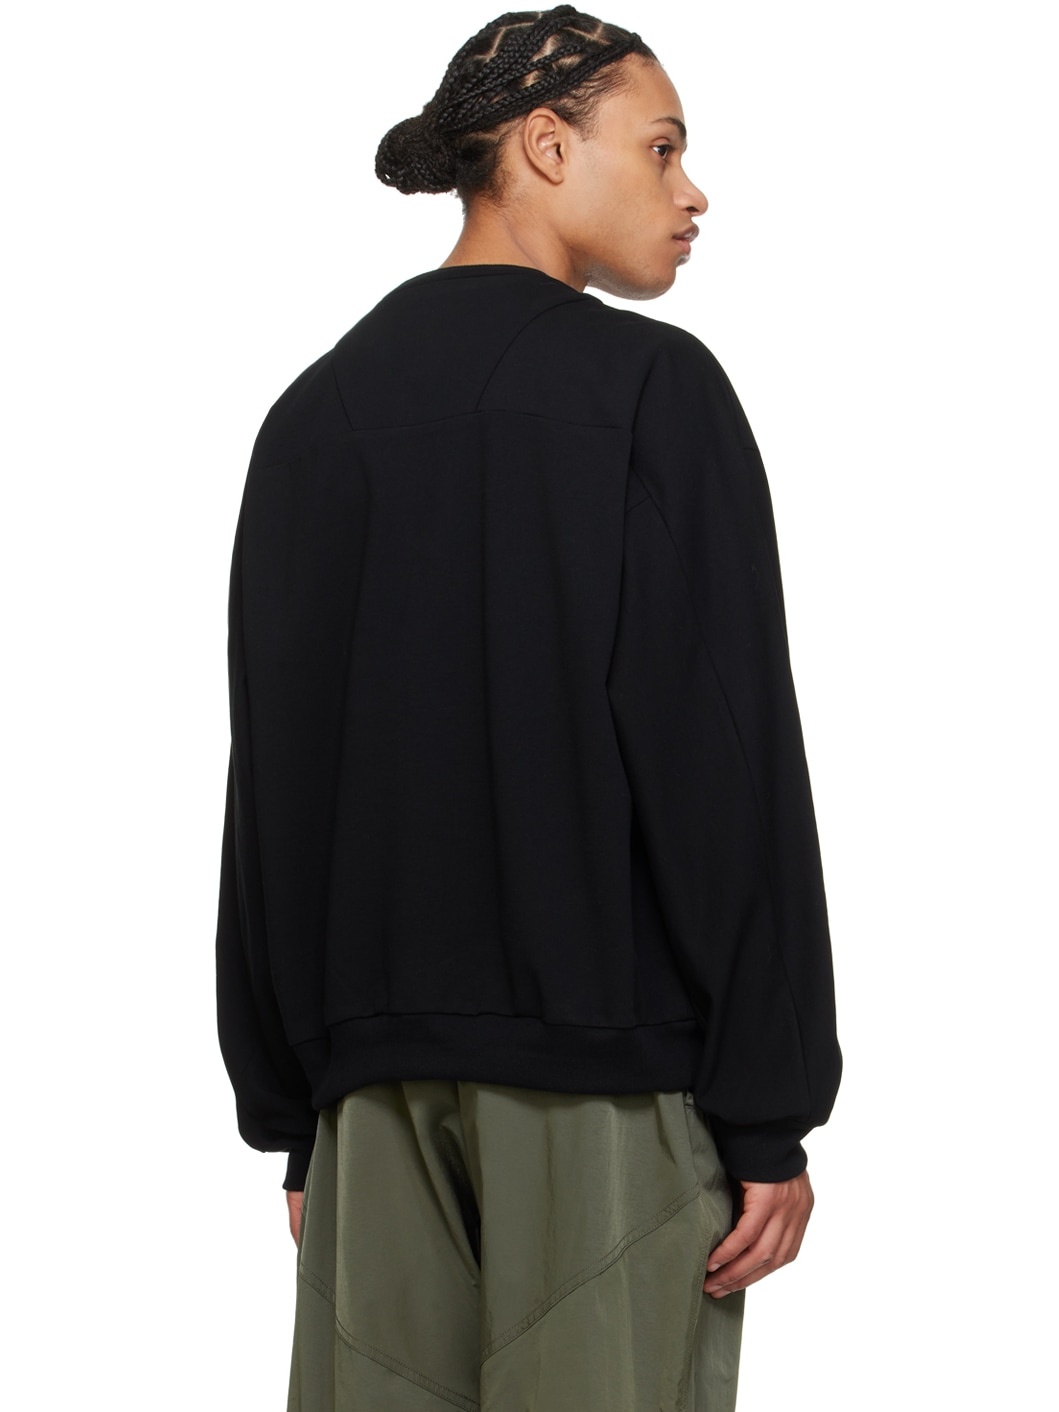 Black Embroidered Sweatshirt - 3